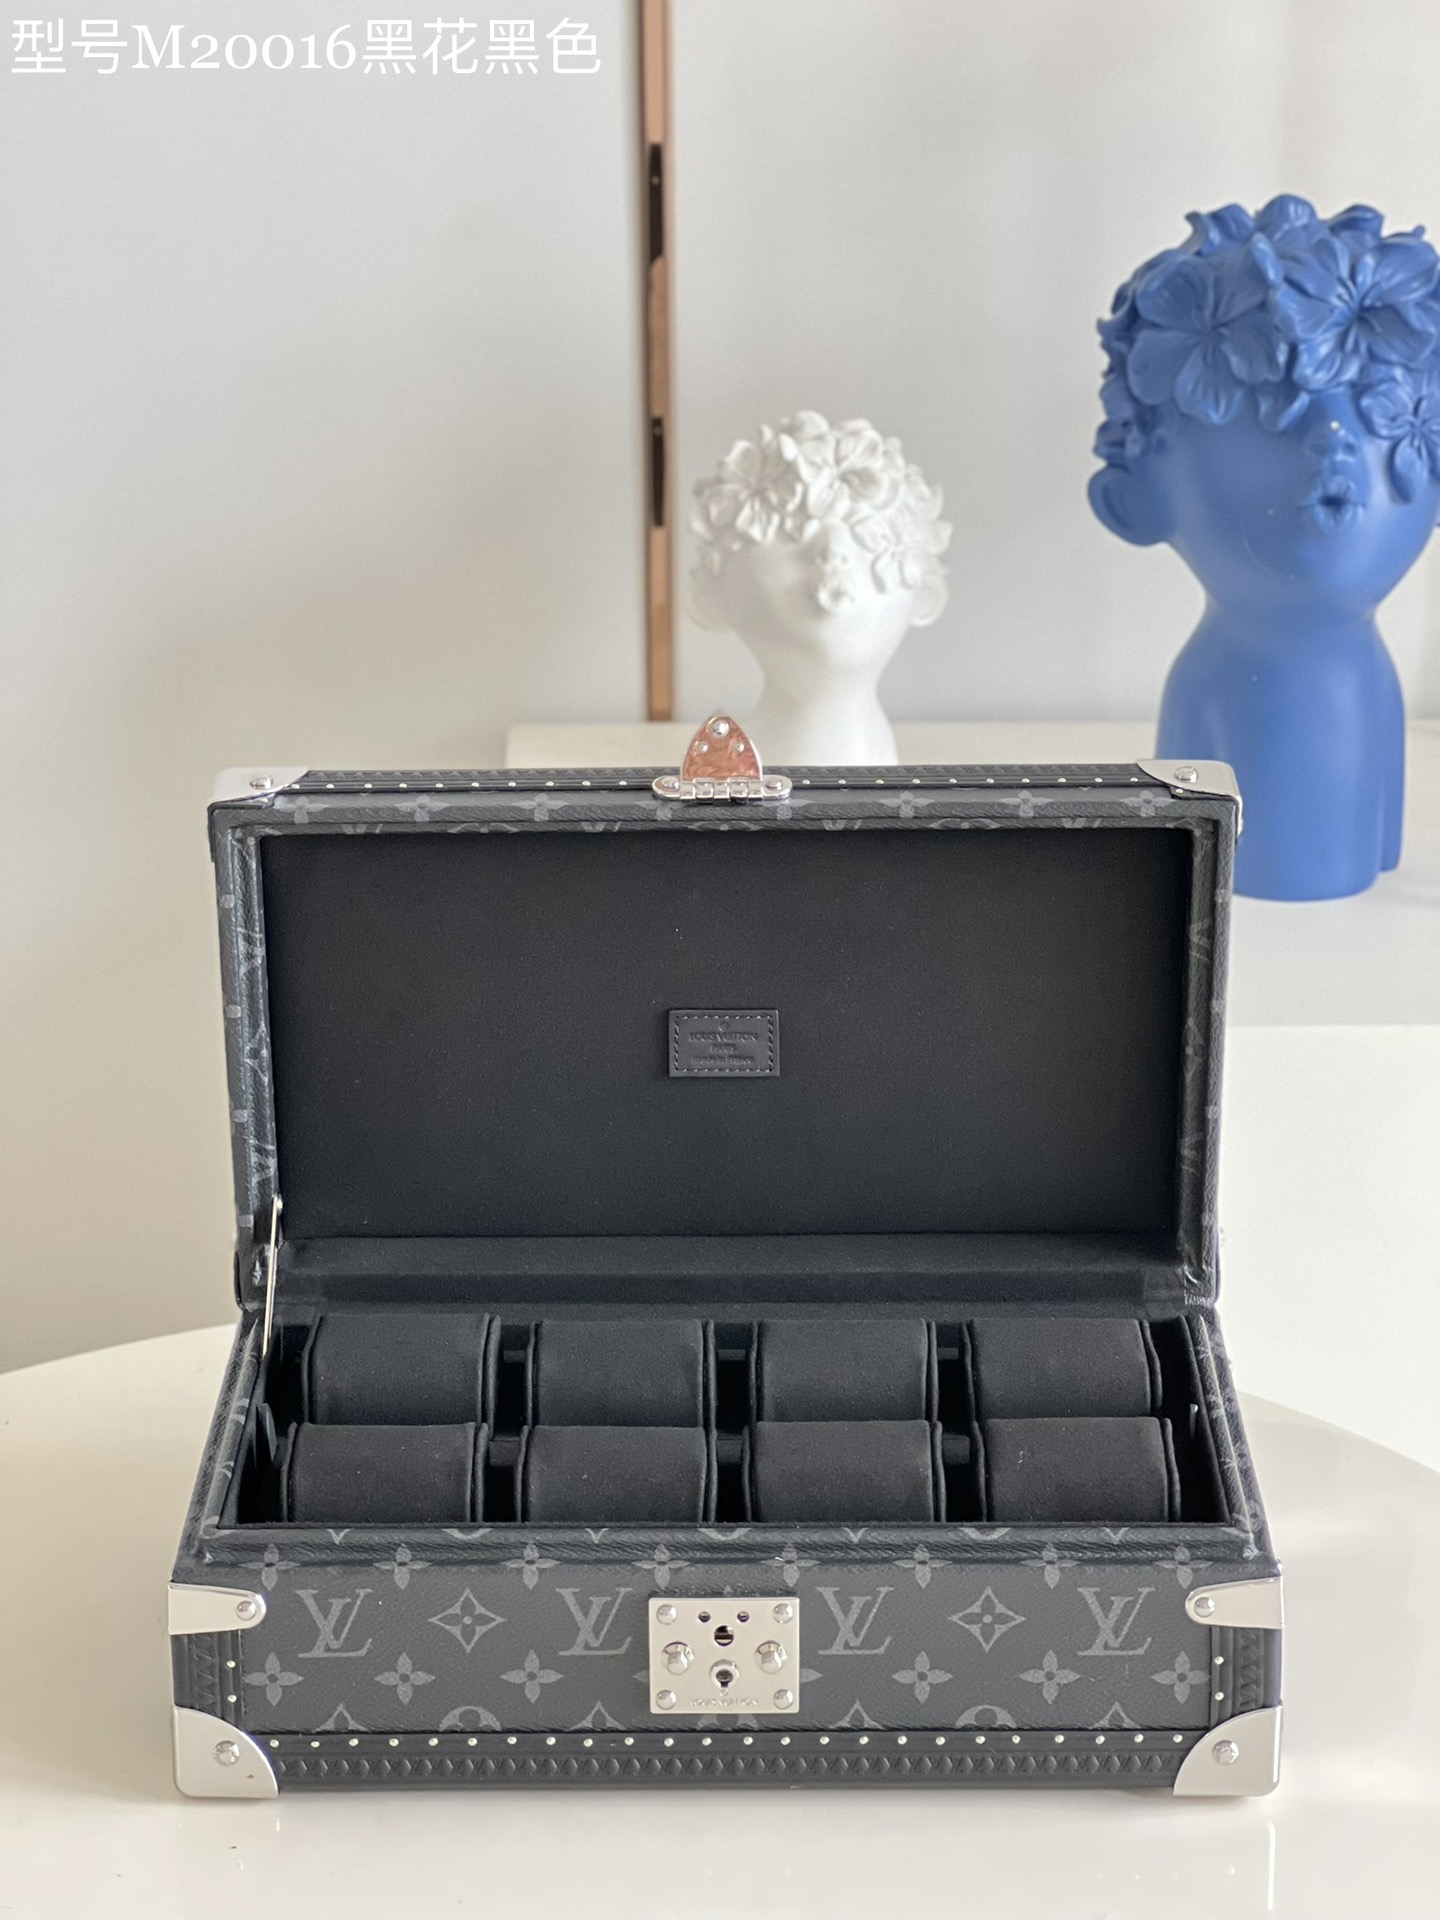 Louis Vuitton Watch Box Buy First Copy Replica
 Black Monogram Canvas M20016